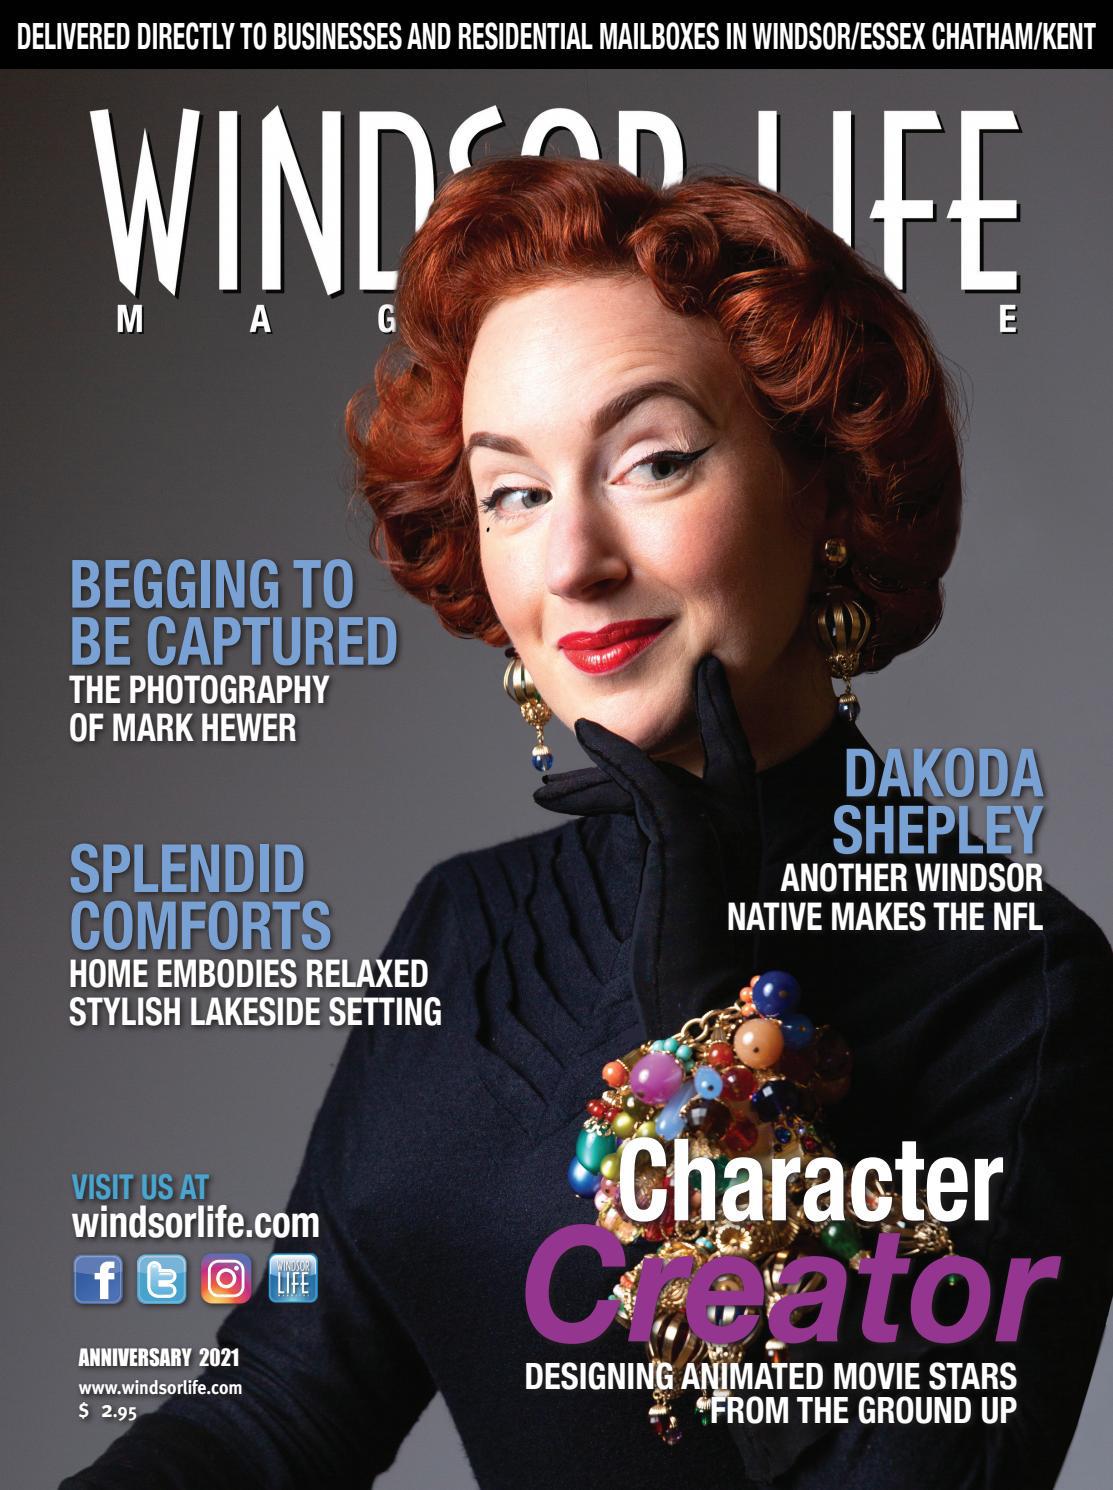 Windsor Life Magazine Anniversary 2021